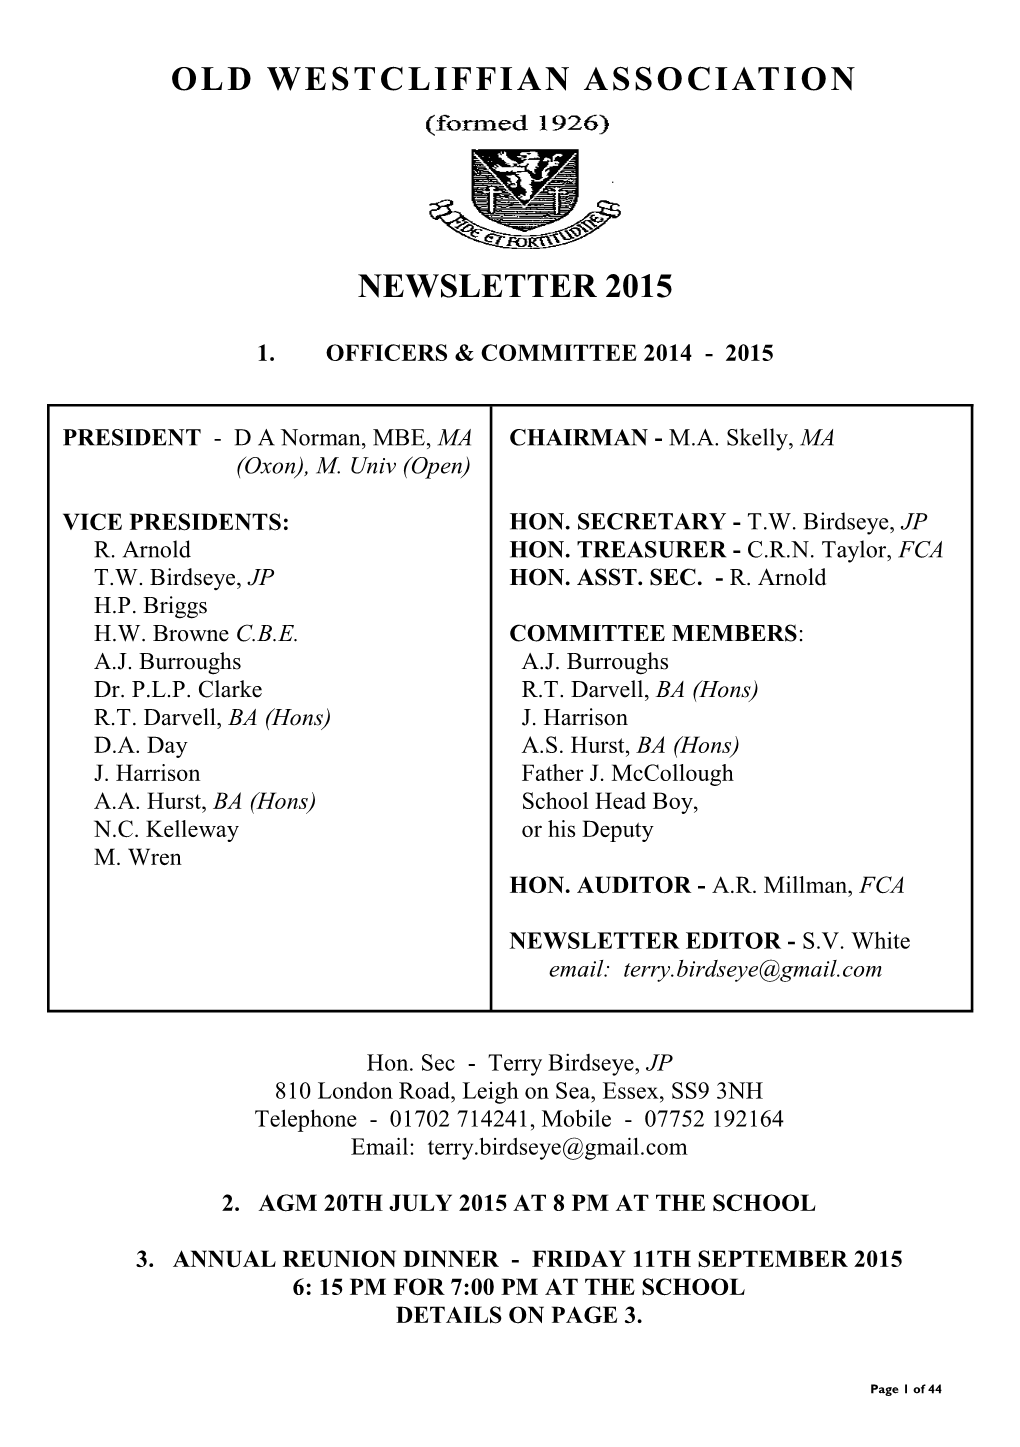 Old Westcliffian Association Newsletter 2015